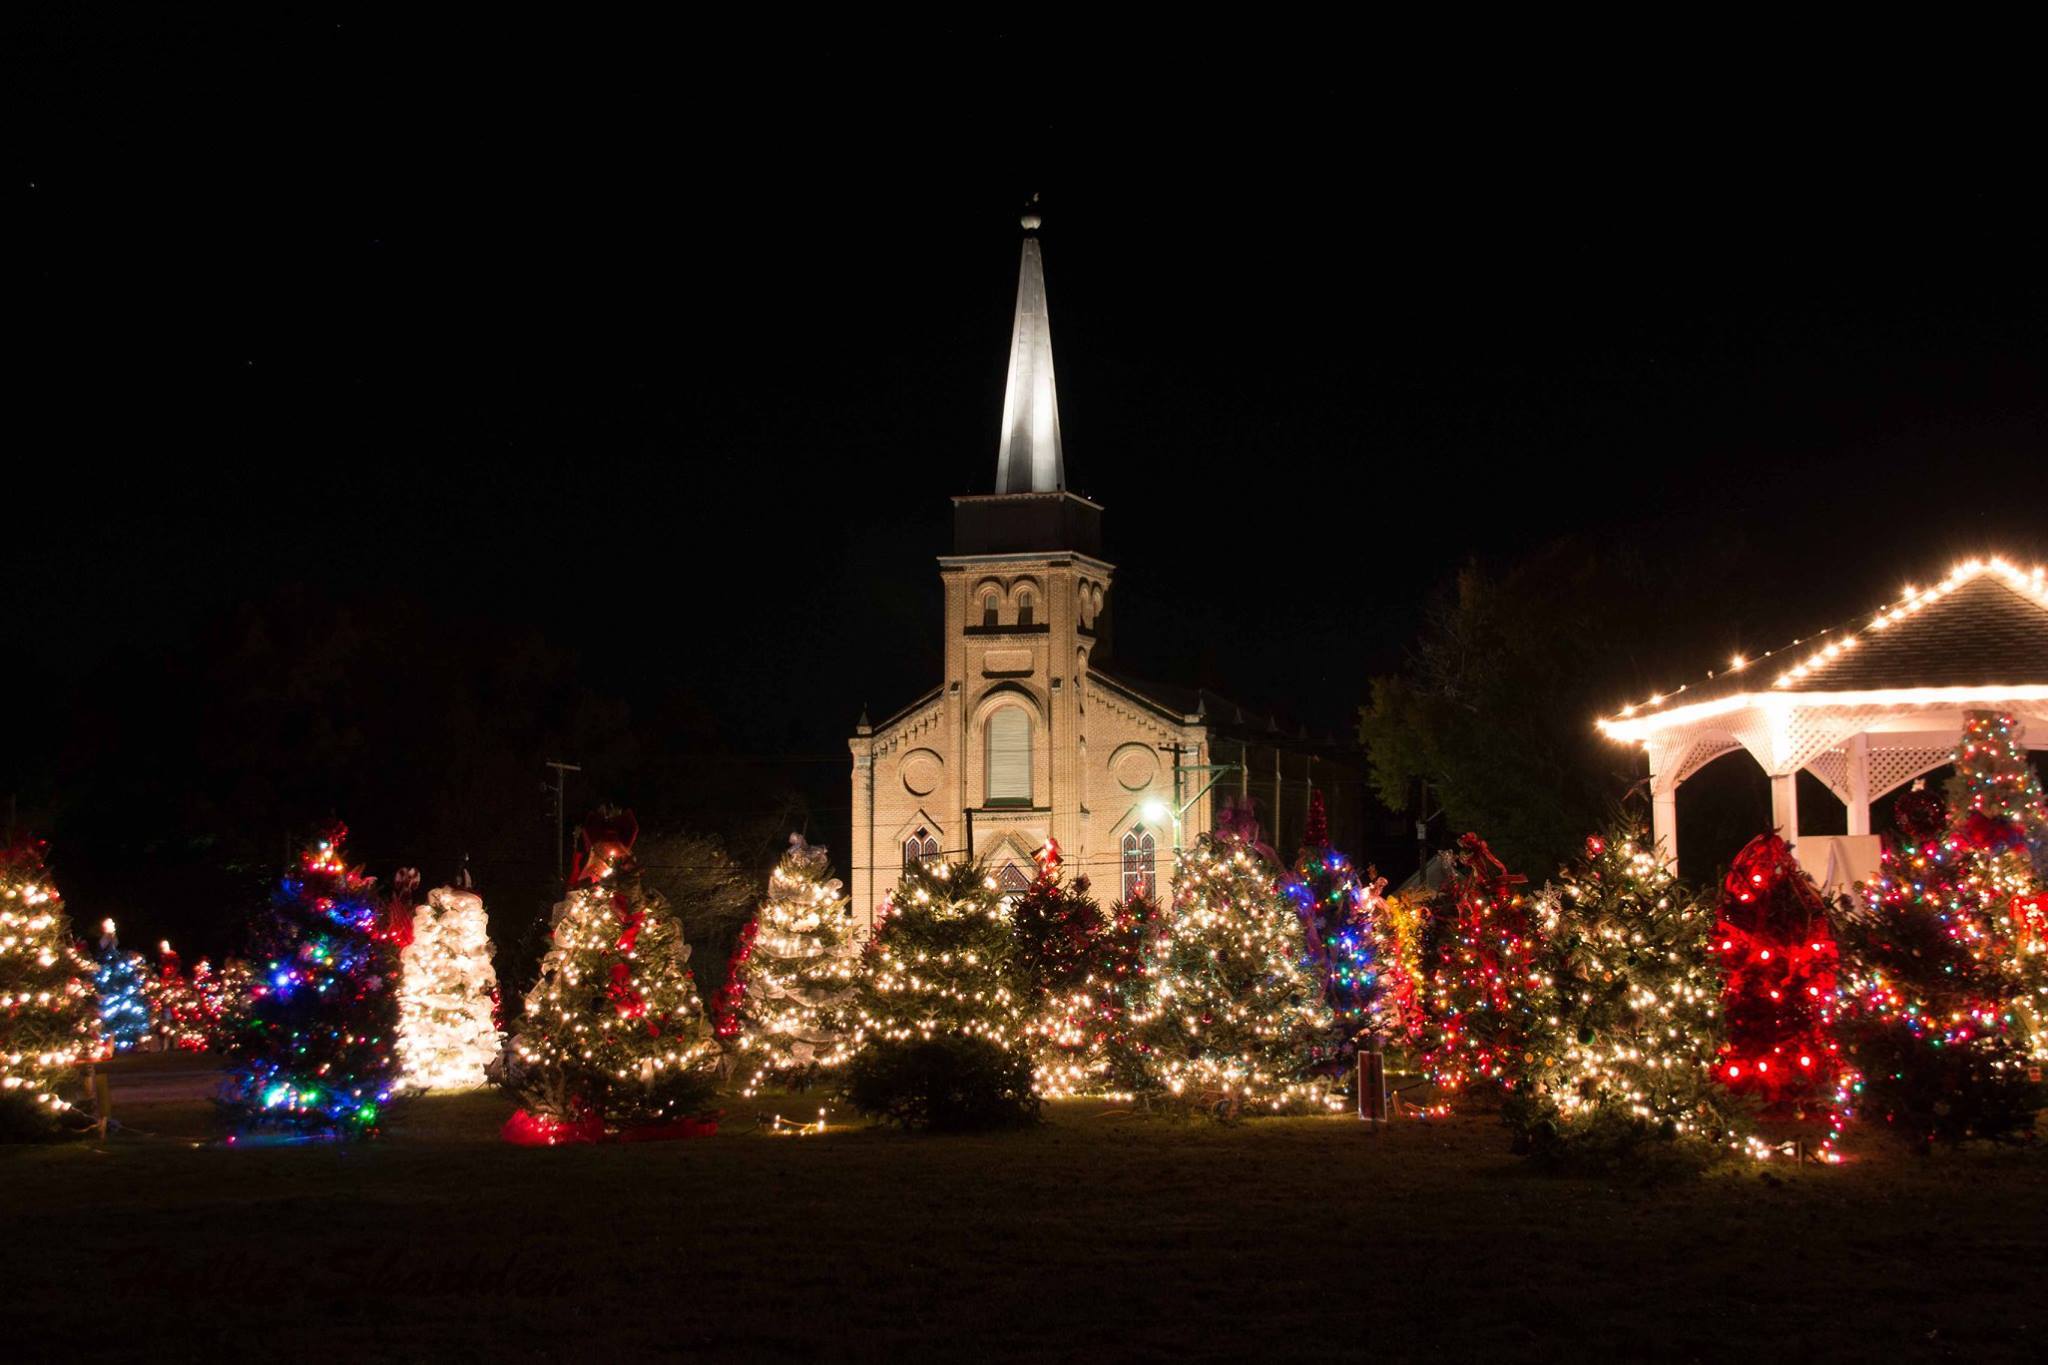 Walk Through A Trail Of Christmas Trees In Texas This Holiday Season